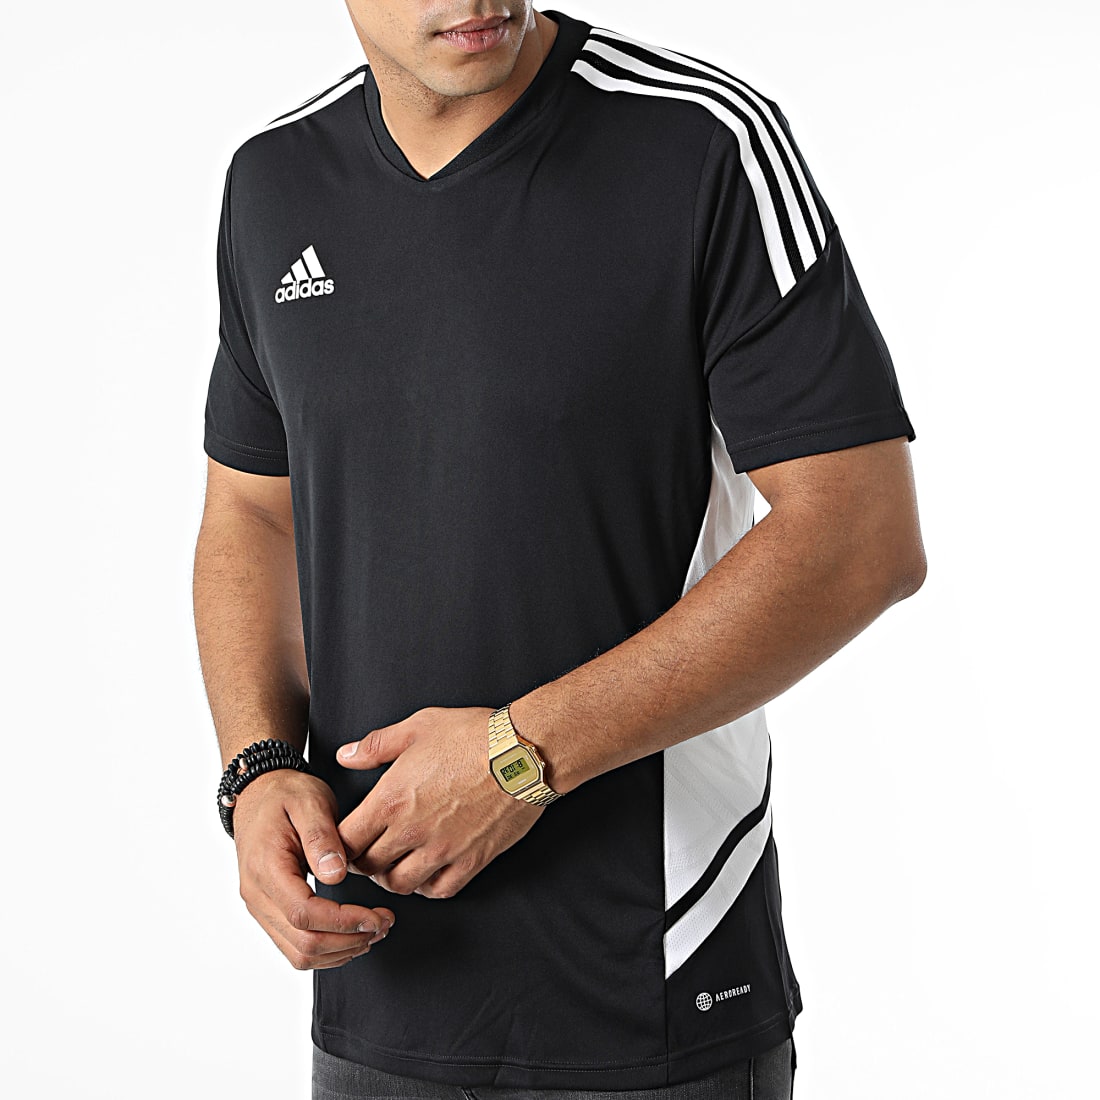 Adidas - Vétements de sport & accessoires, Hauts & Tee-shirts